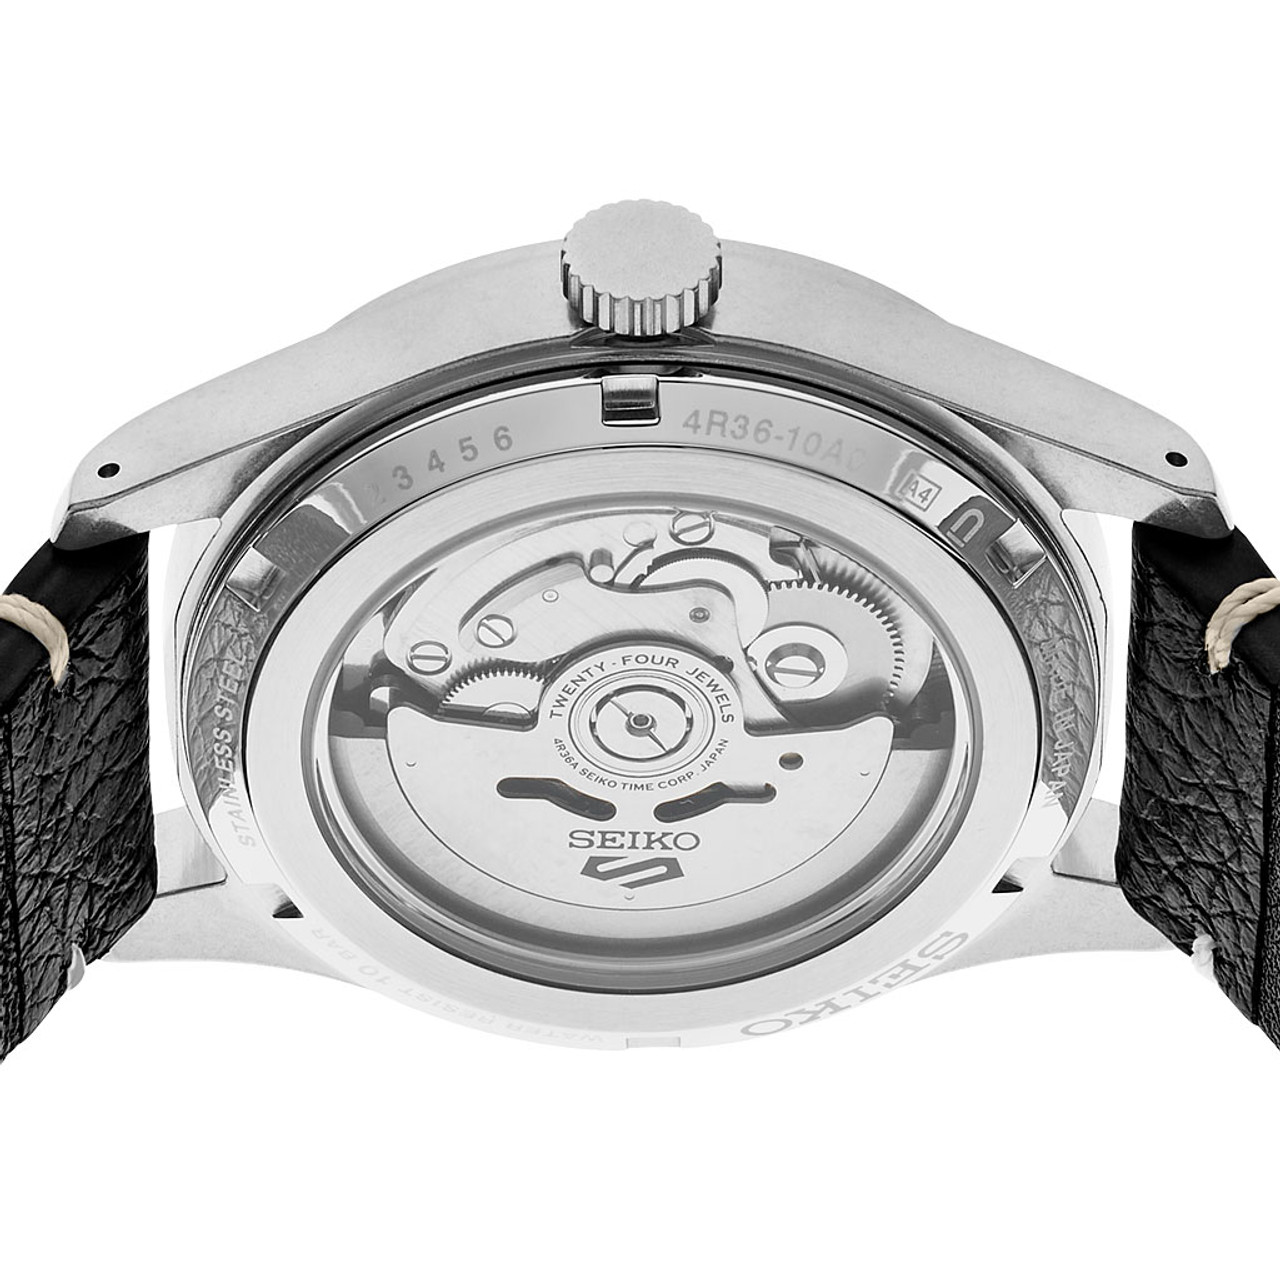 Seiko 5 Automatic Watch with Dark Blue #SRPG39